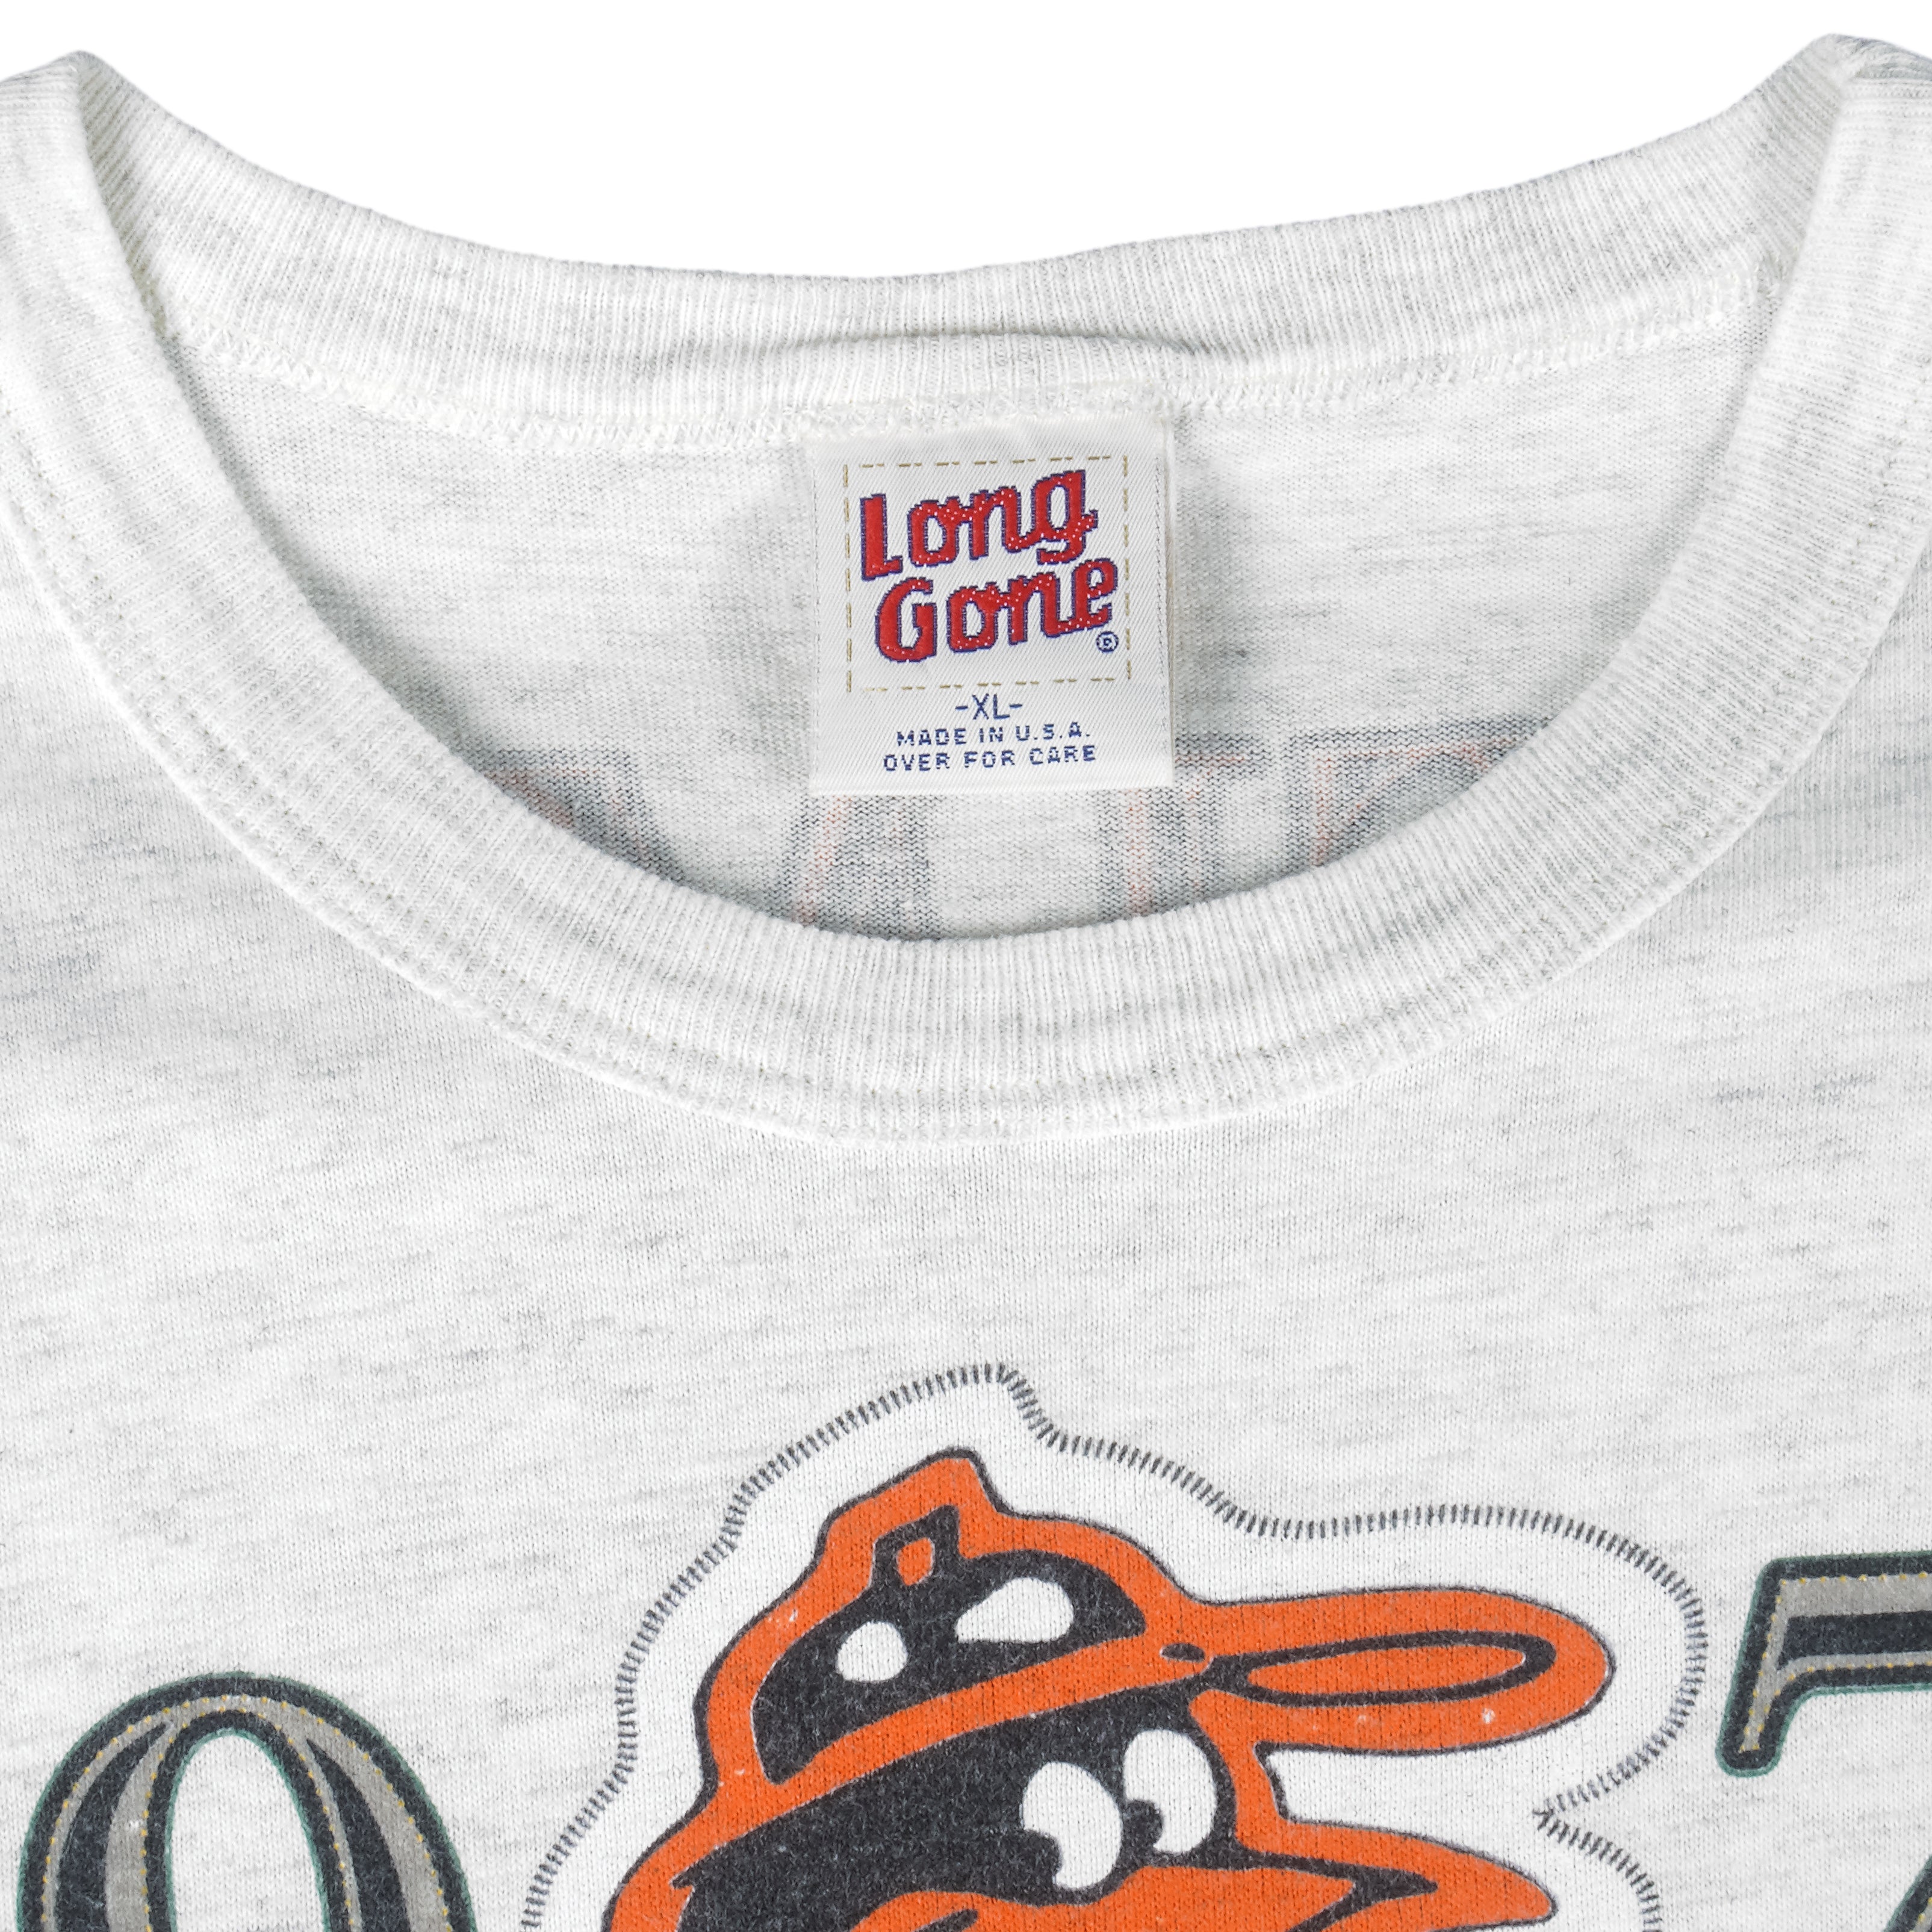 90s Baltimore Orioles Baseball T-shirt Medium -  Israel